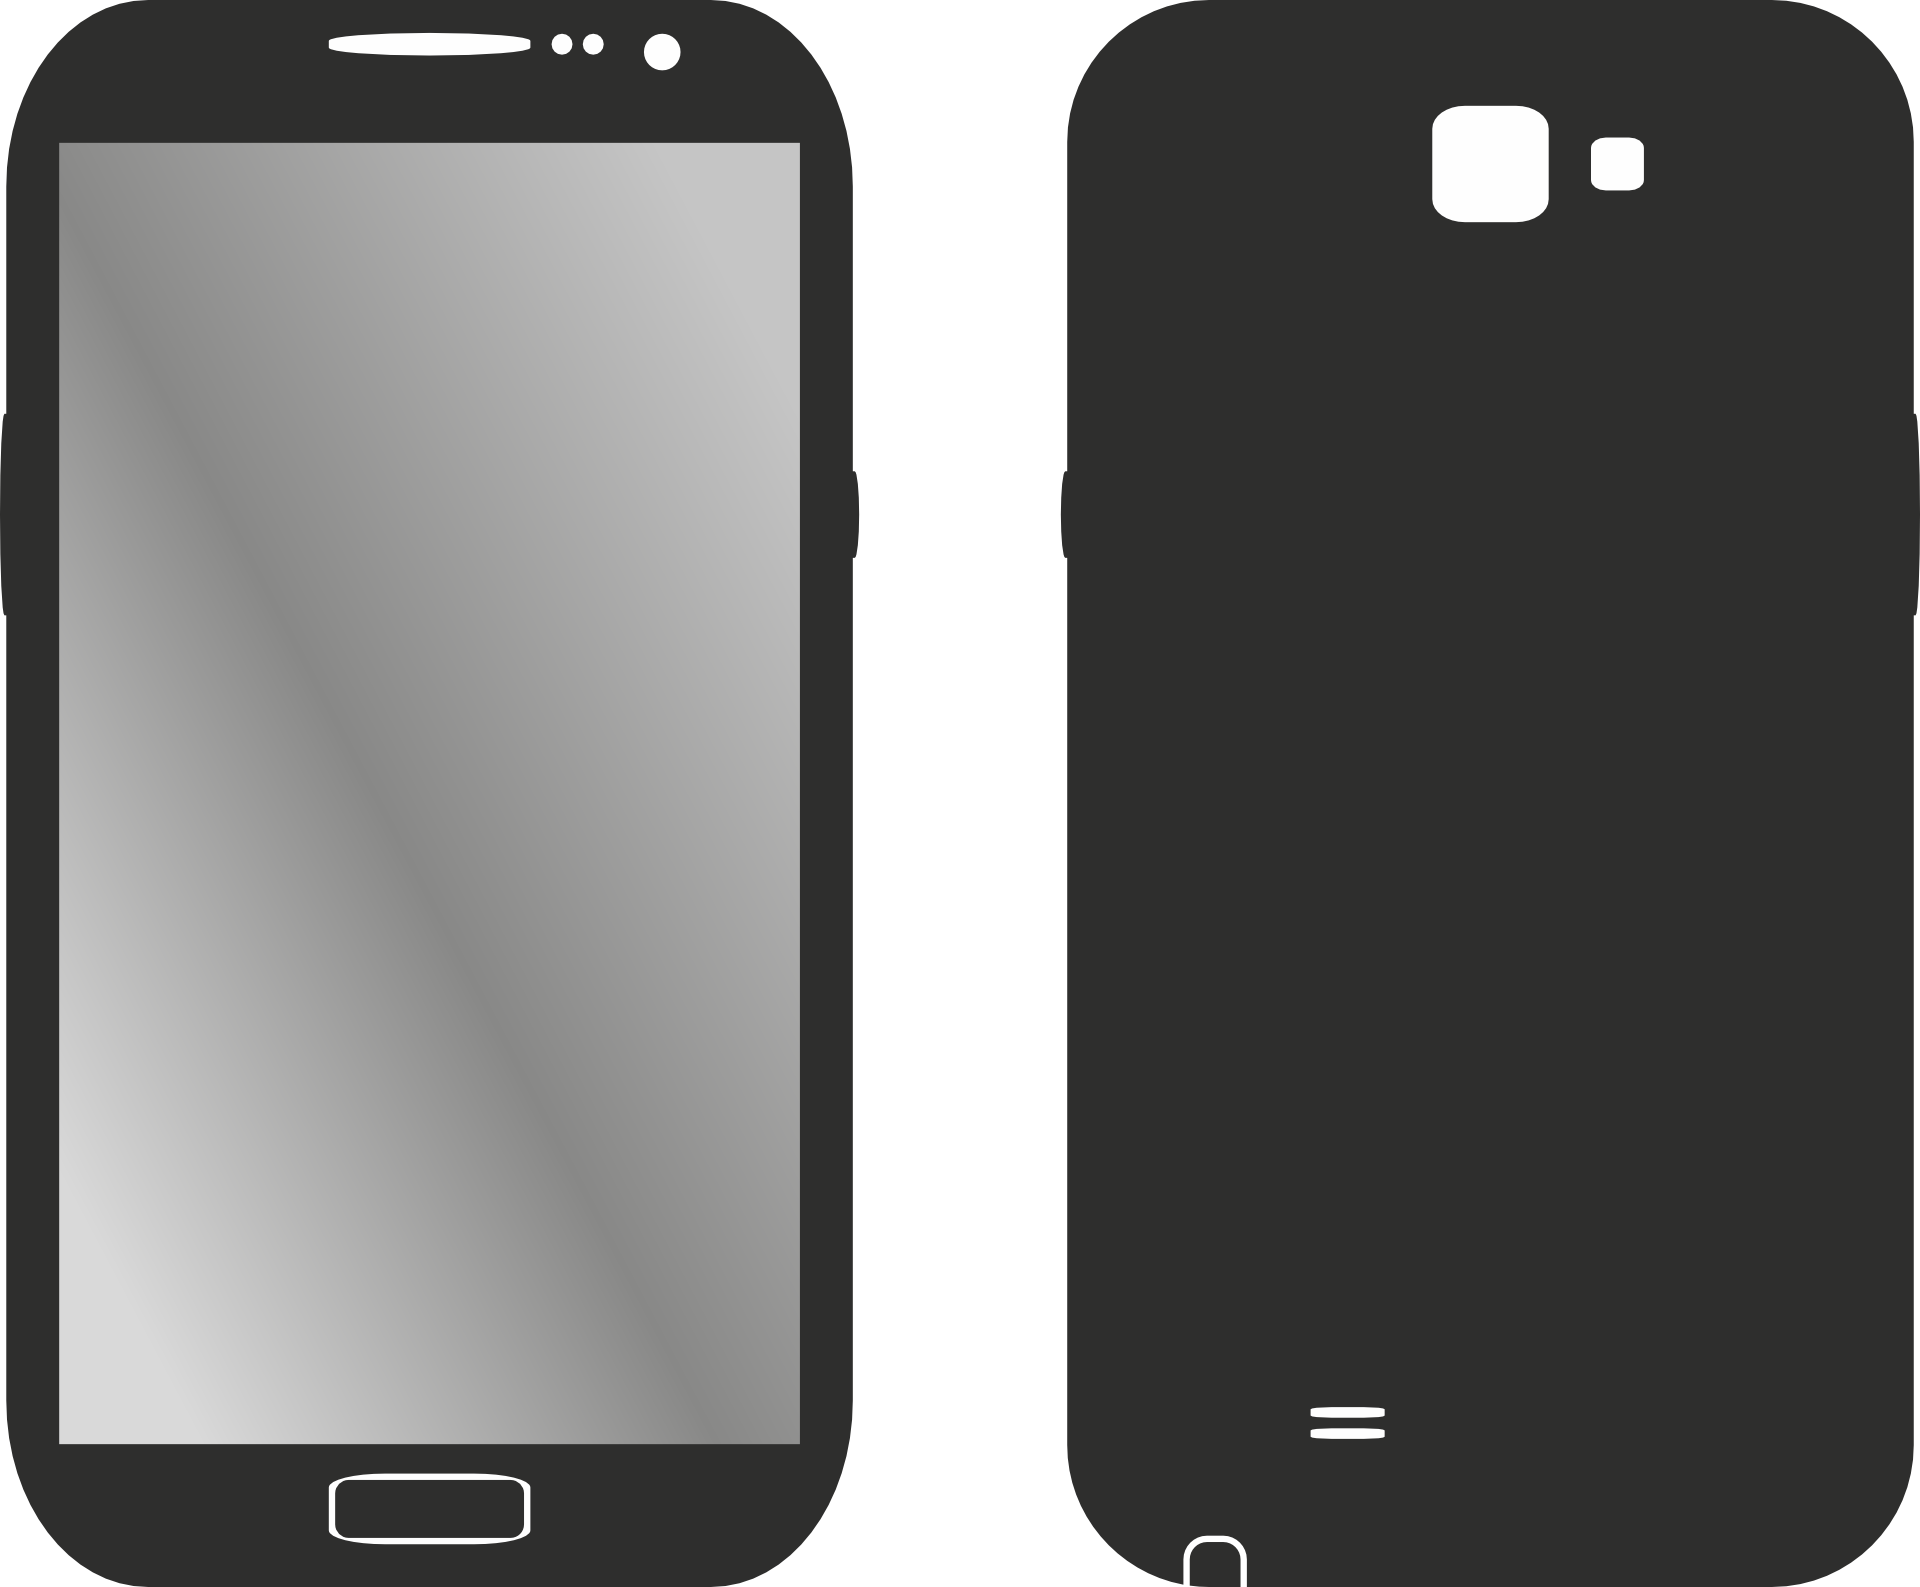 Картинка телефон смартфон для детей на прозрачном фоне